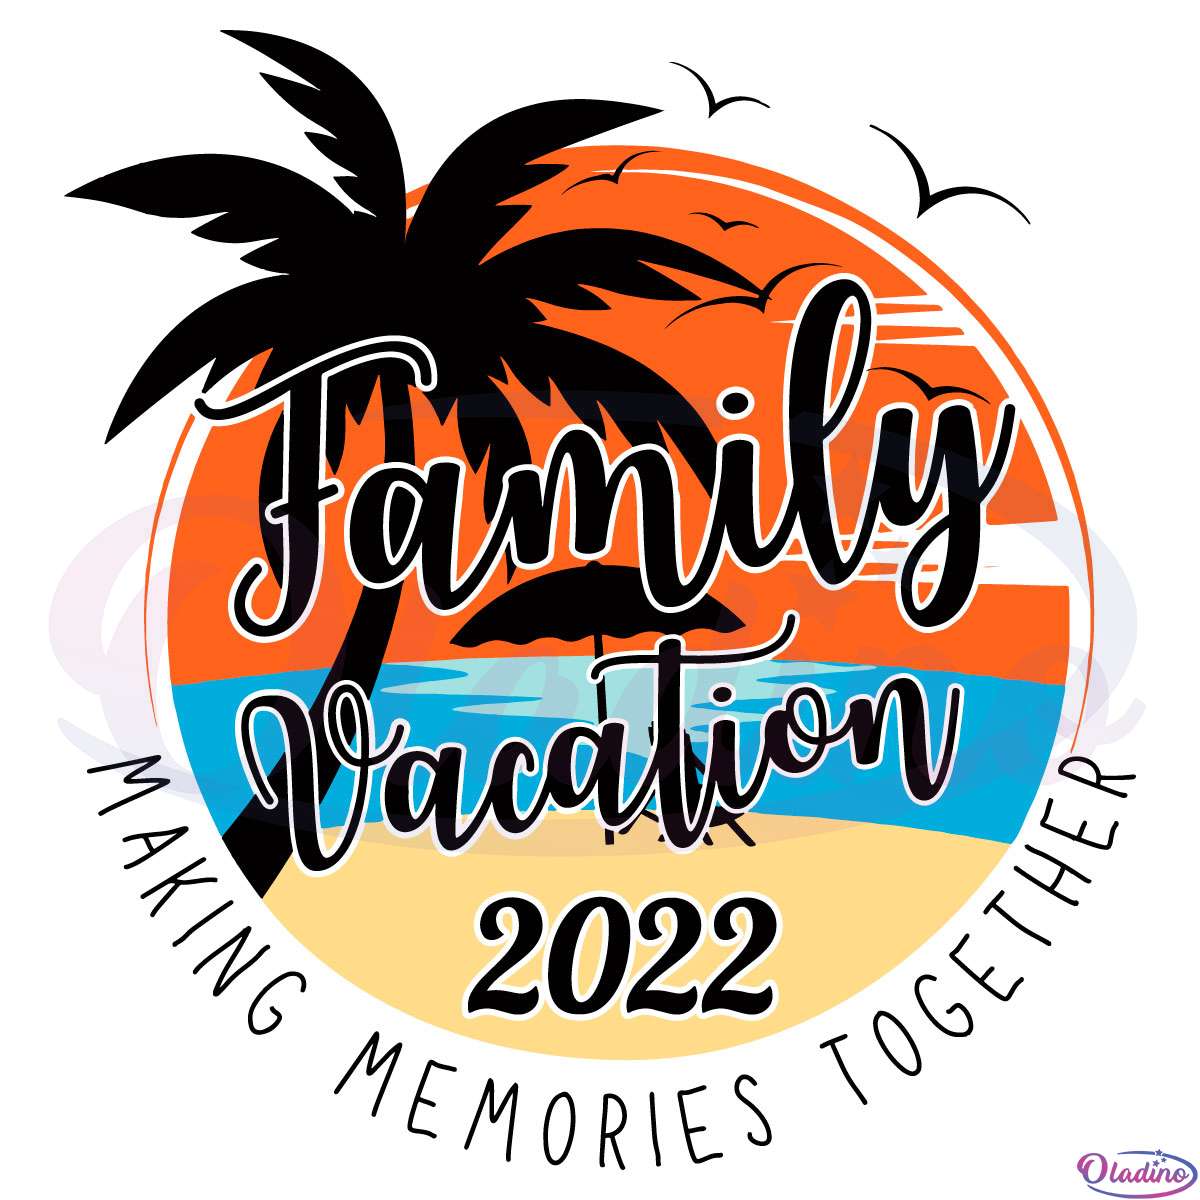 Family Vacation 2022 Making Memories Together Svg Digital File